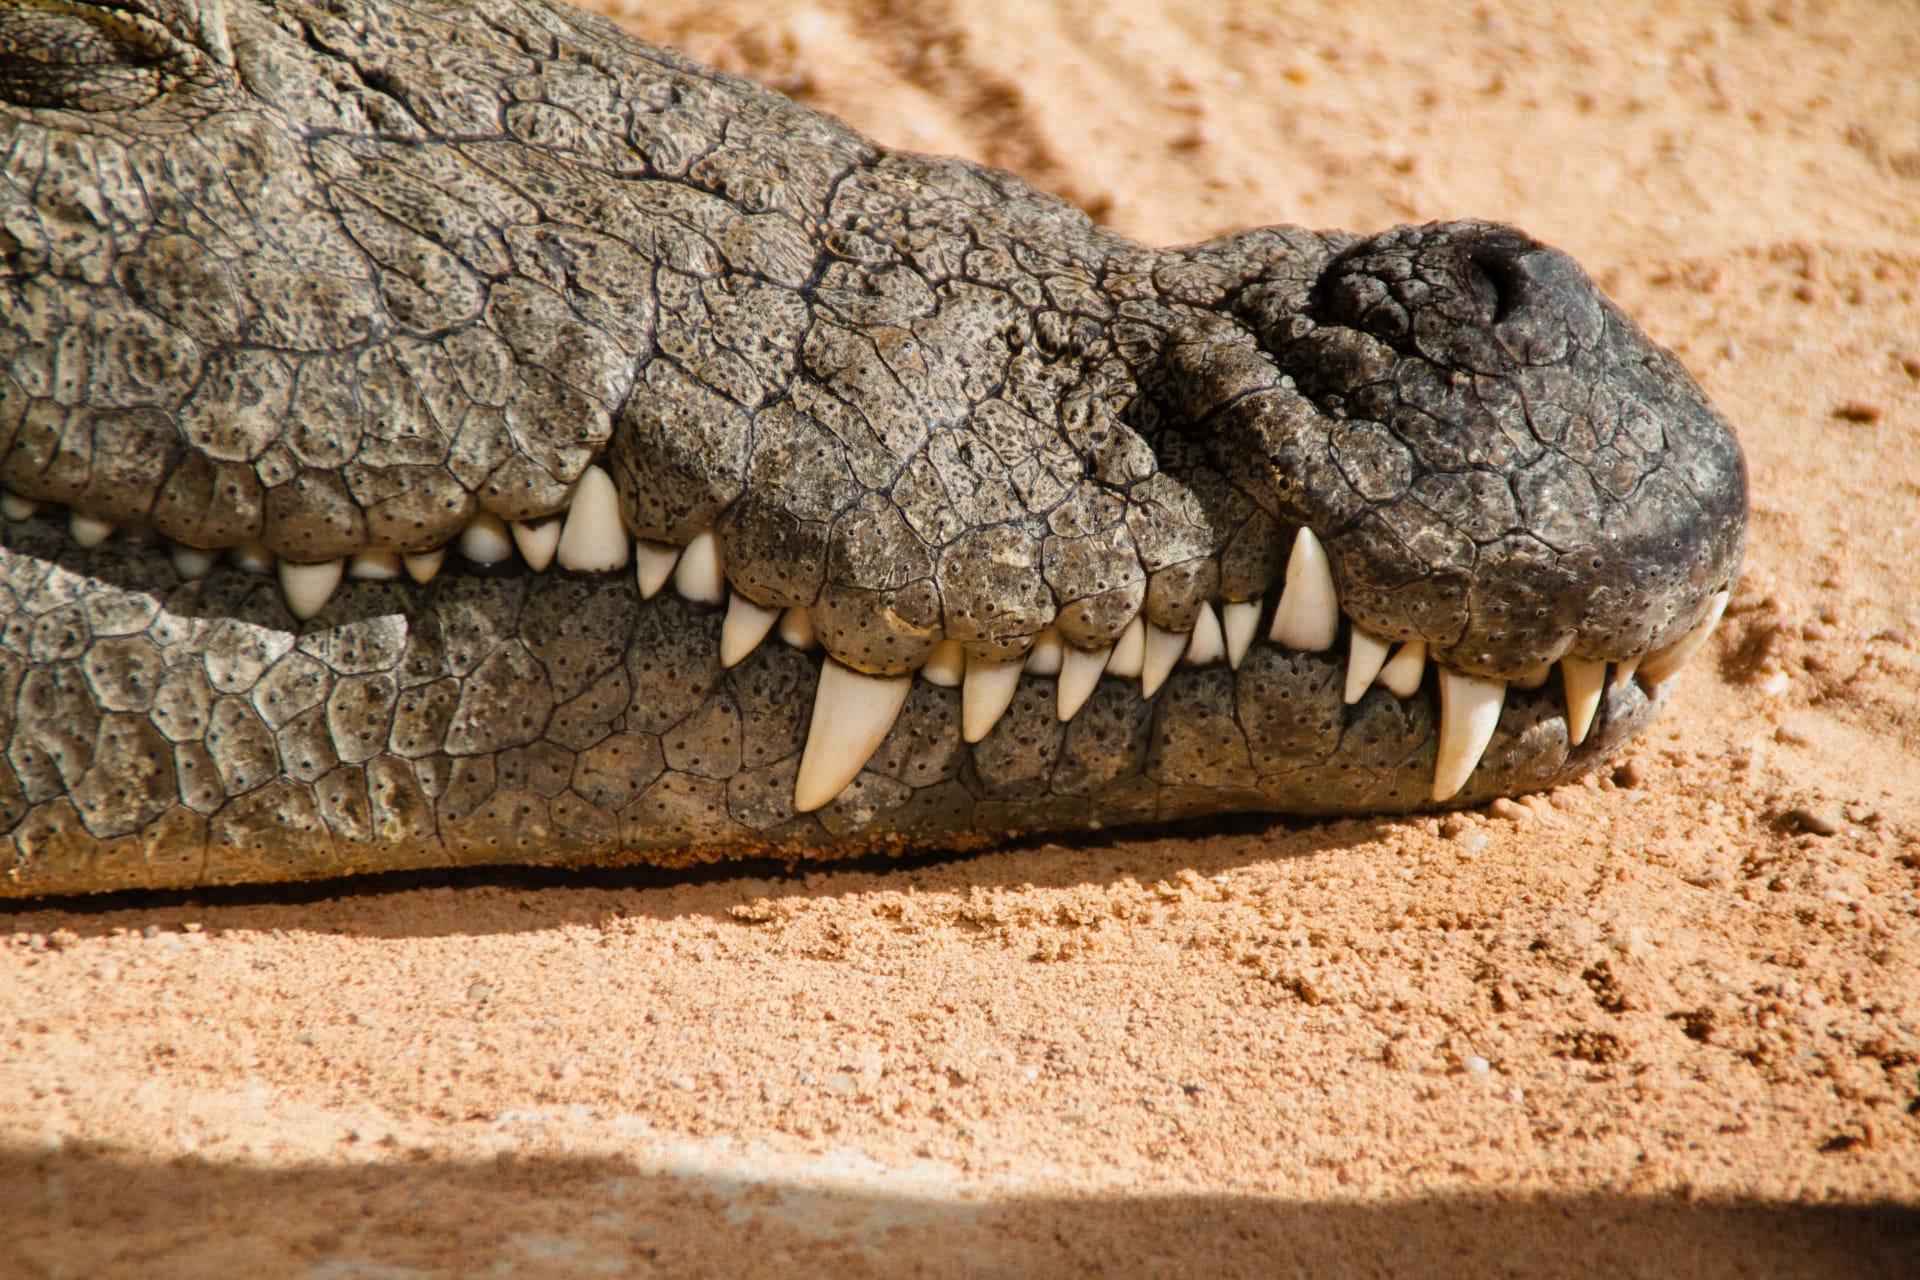 Crocodile pictures